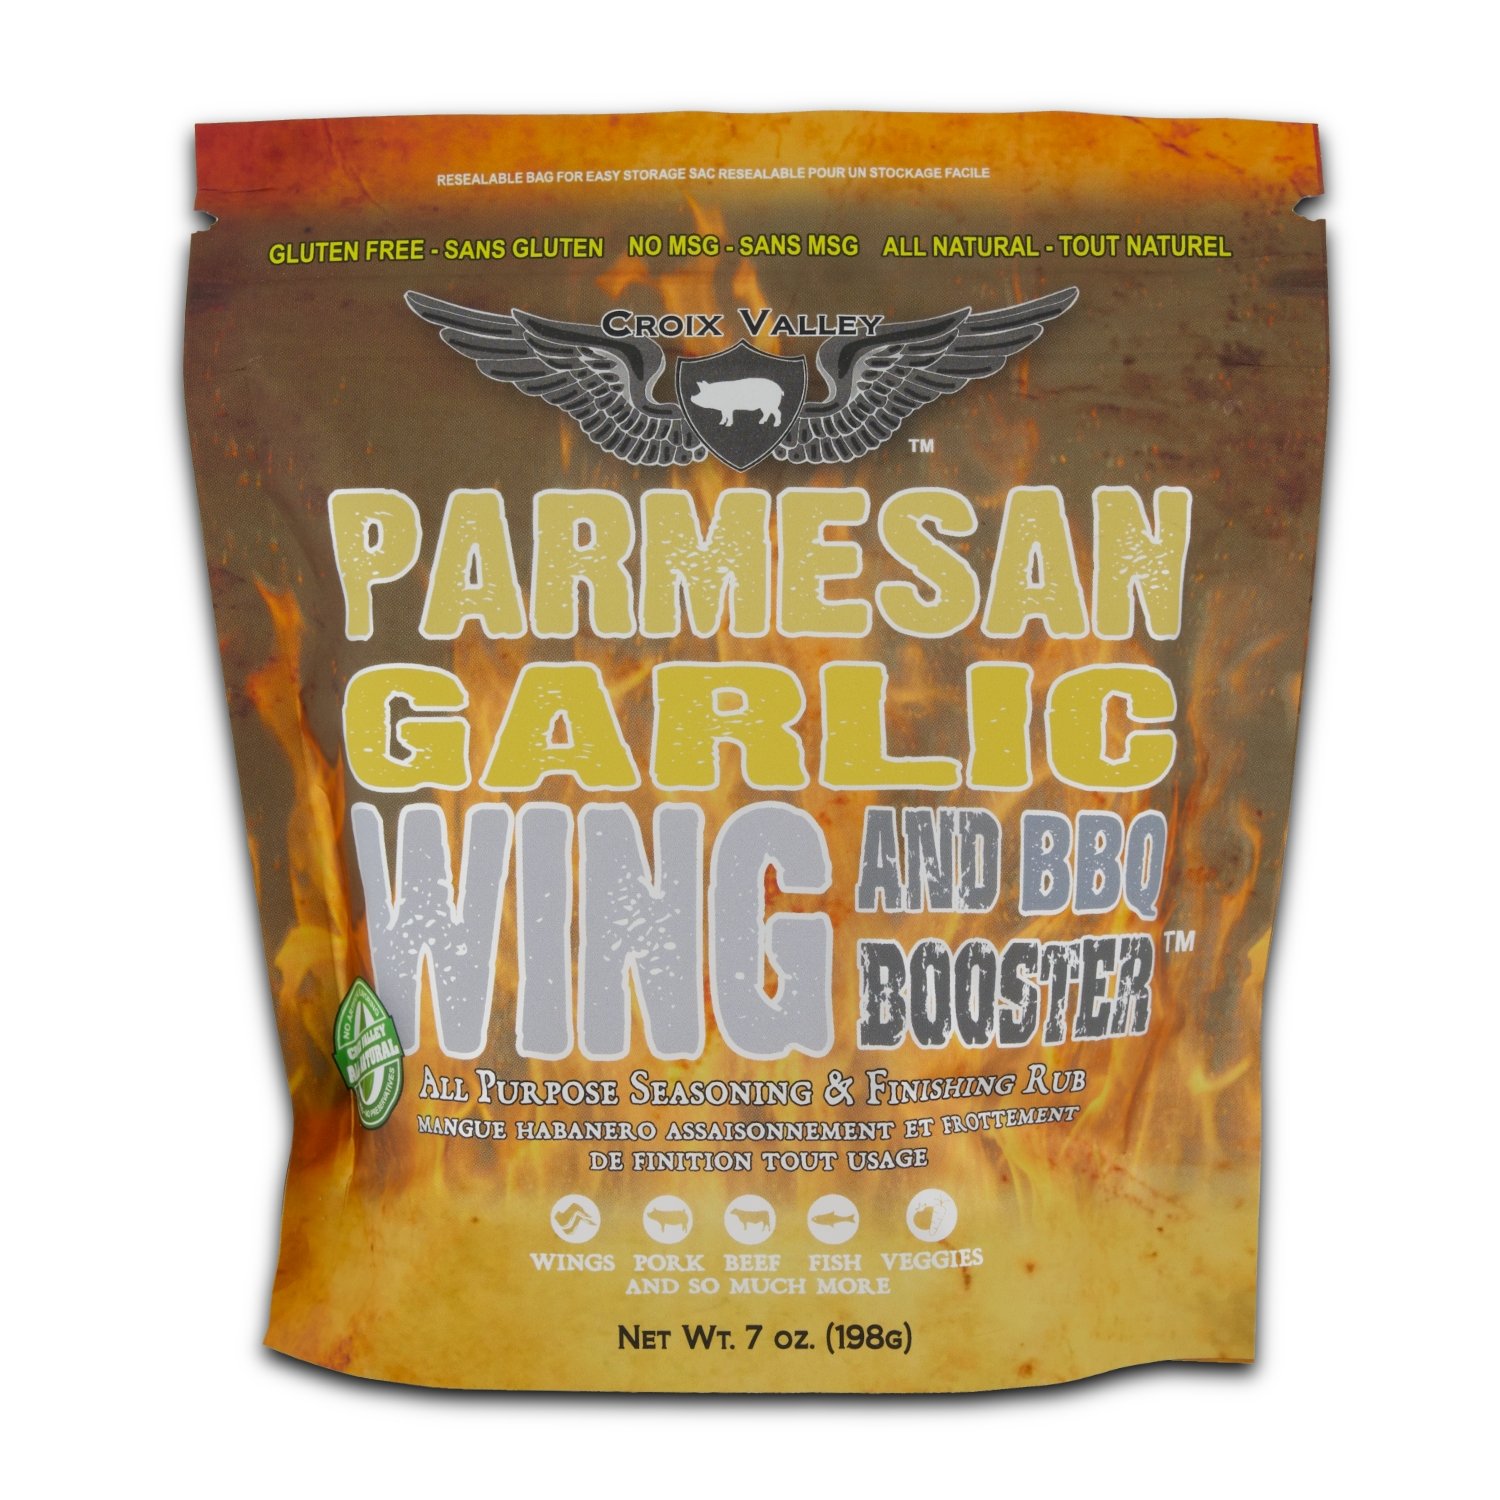 Parmesan Garlic Wing and BBQ Booster